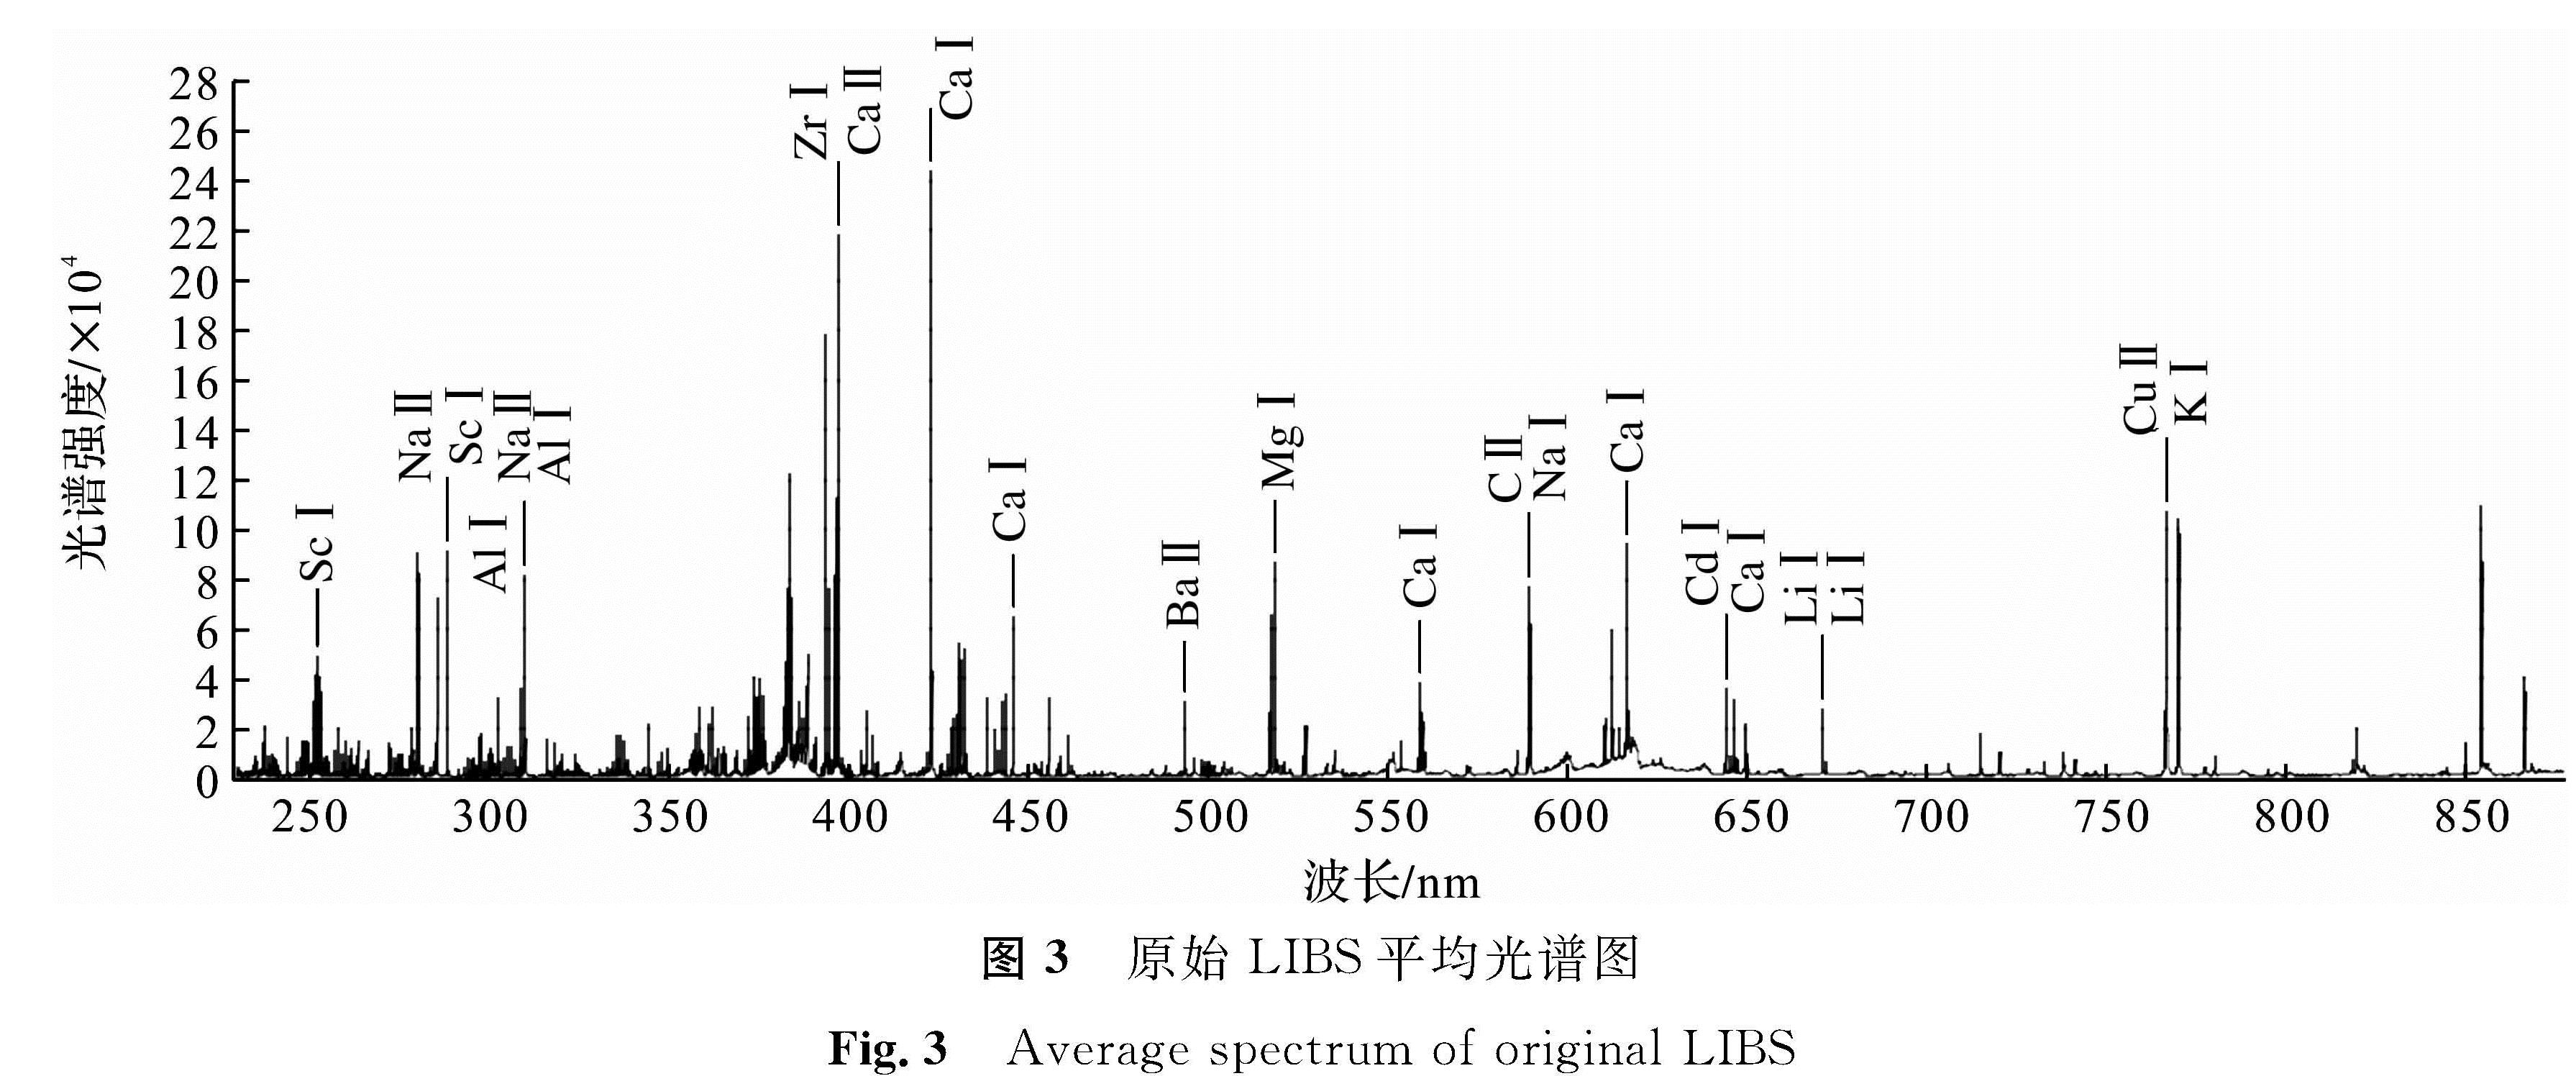 图3 原始LIBS平均光谱图<br/>Fig.3 Average spectrum of original LIBS